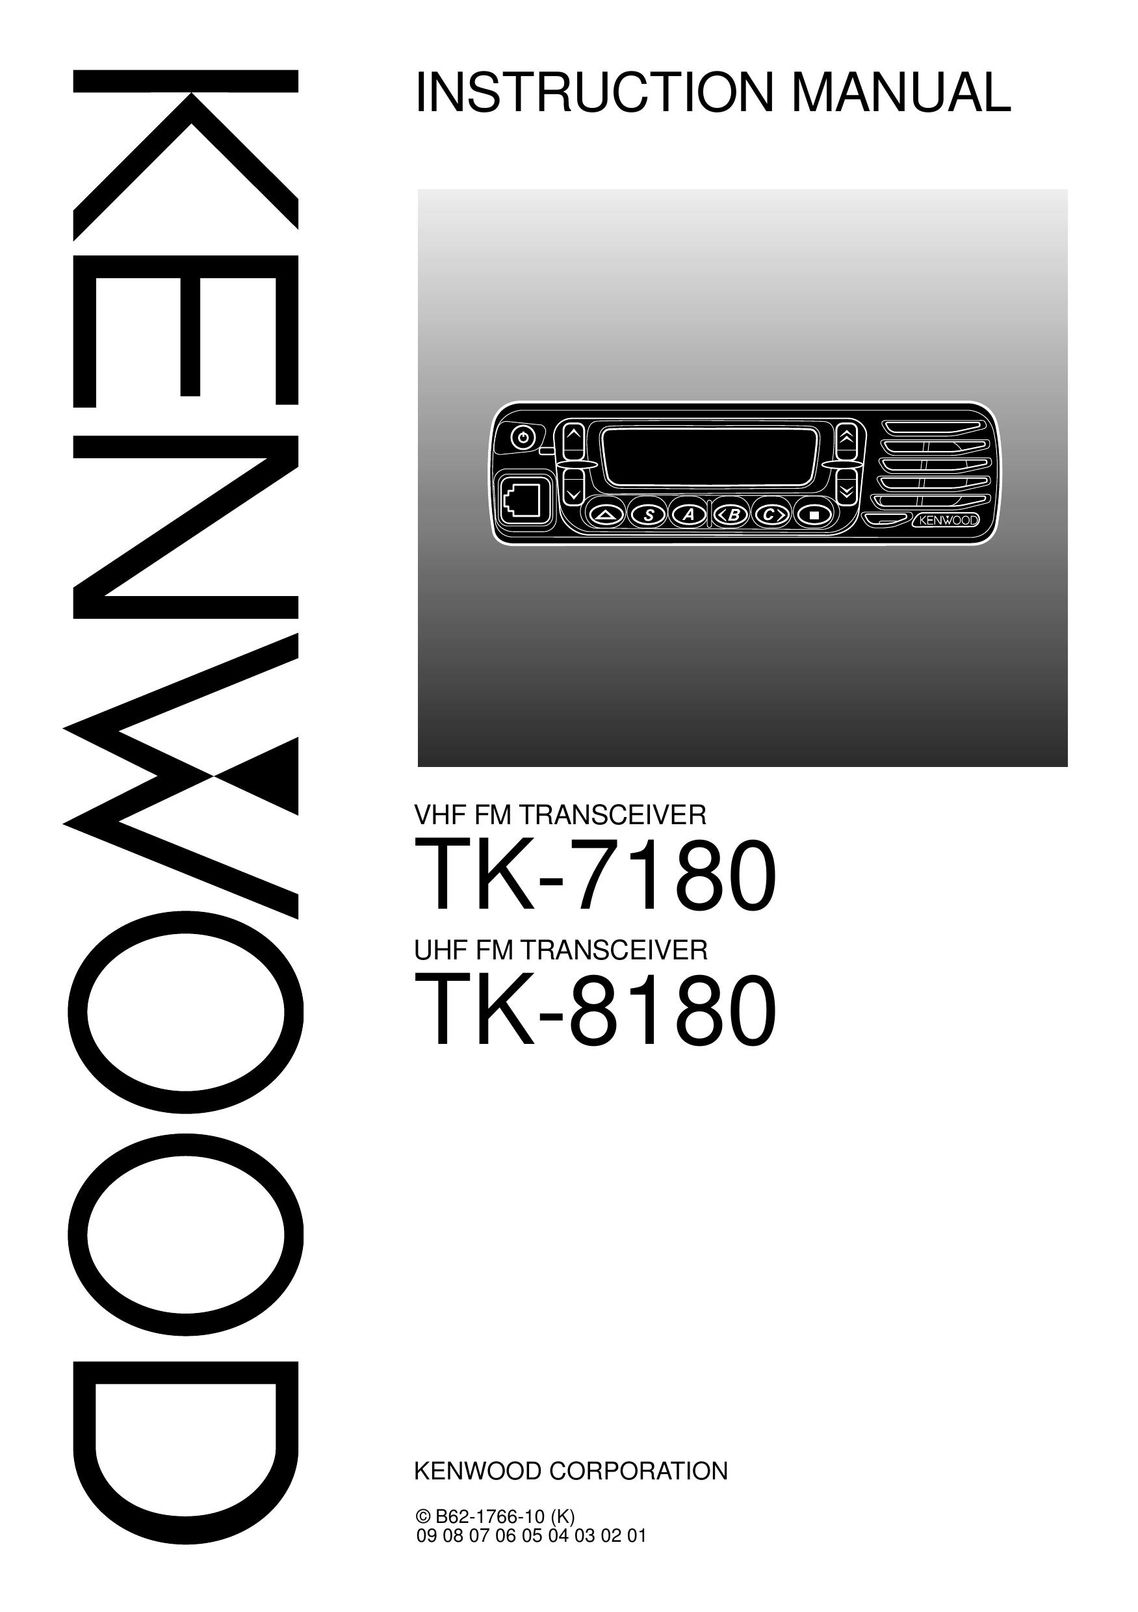 Kenwood TK-8180 Home Security System User Manual